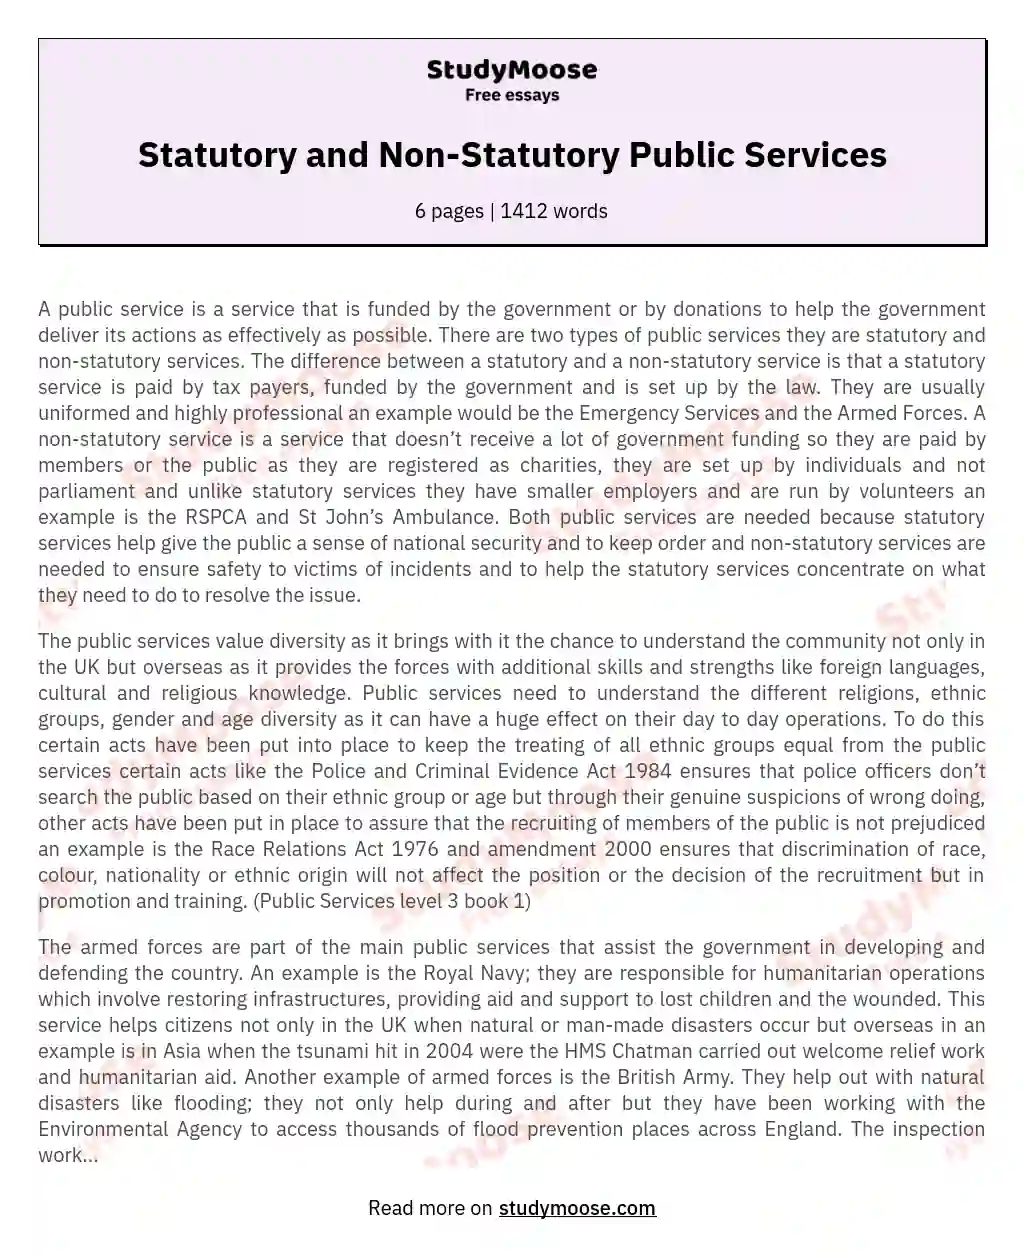 Statutory and Non-Statutory Public Services essay